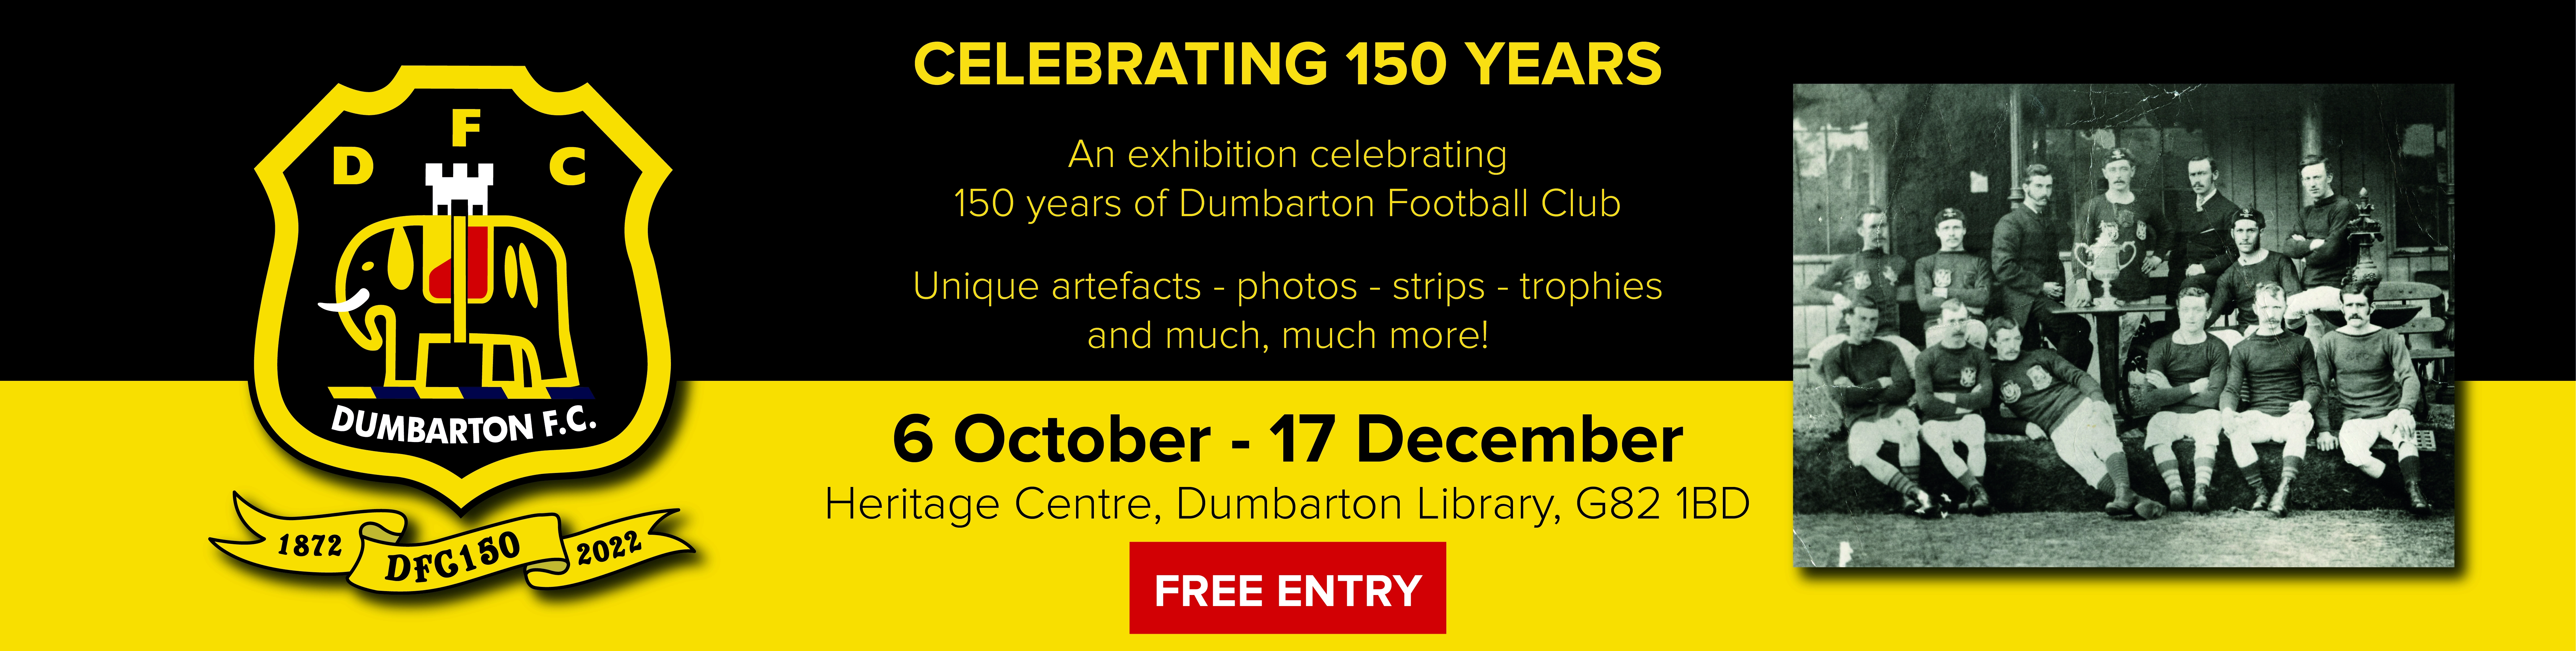 Celebrating 150 years, Dumbarton Football Club